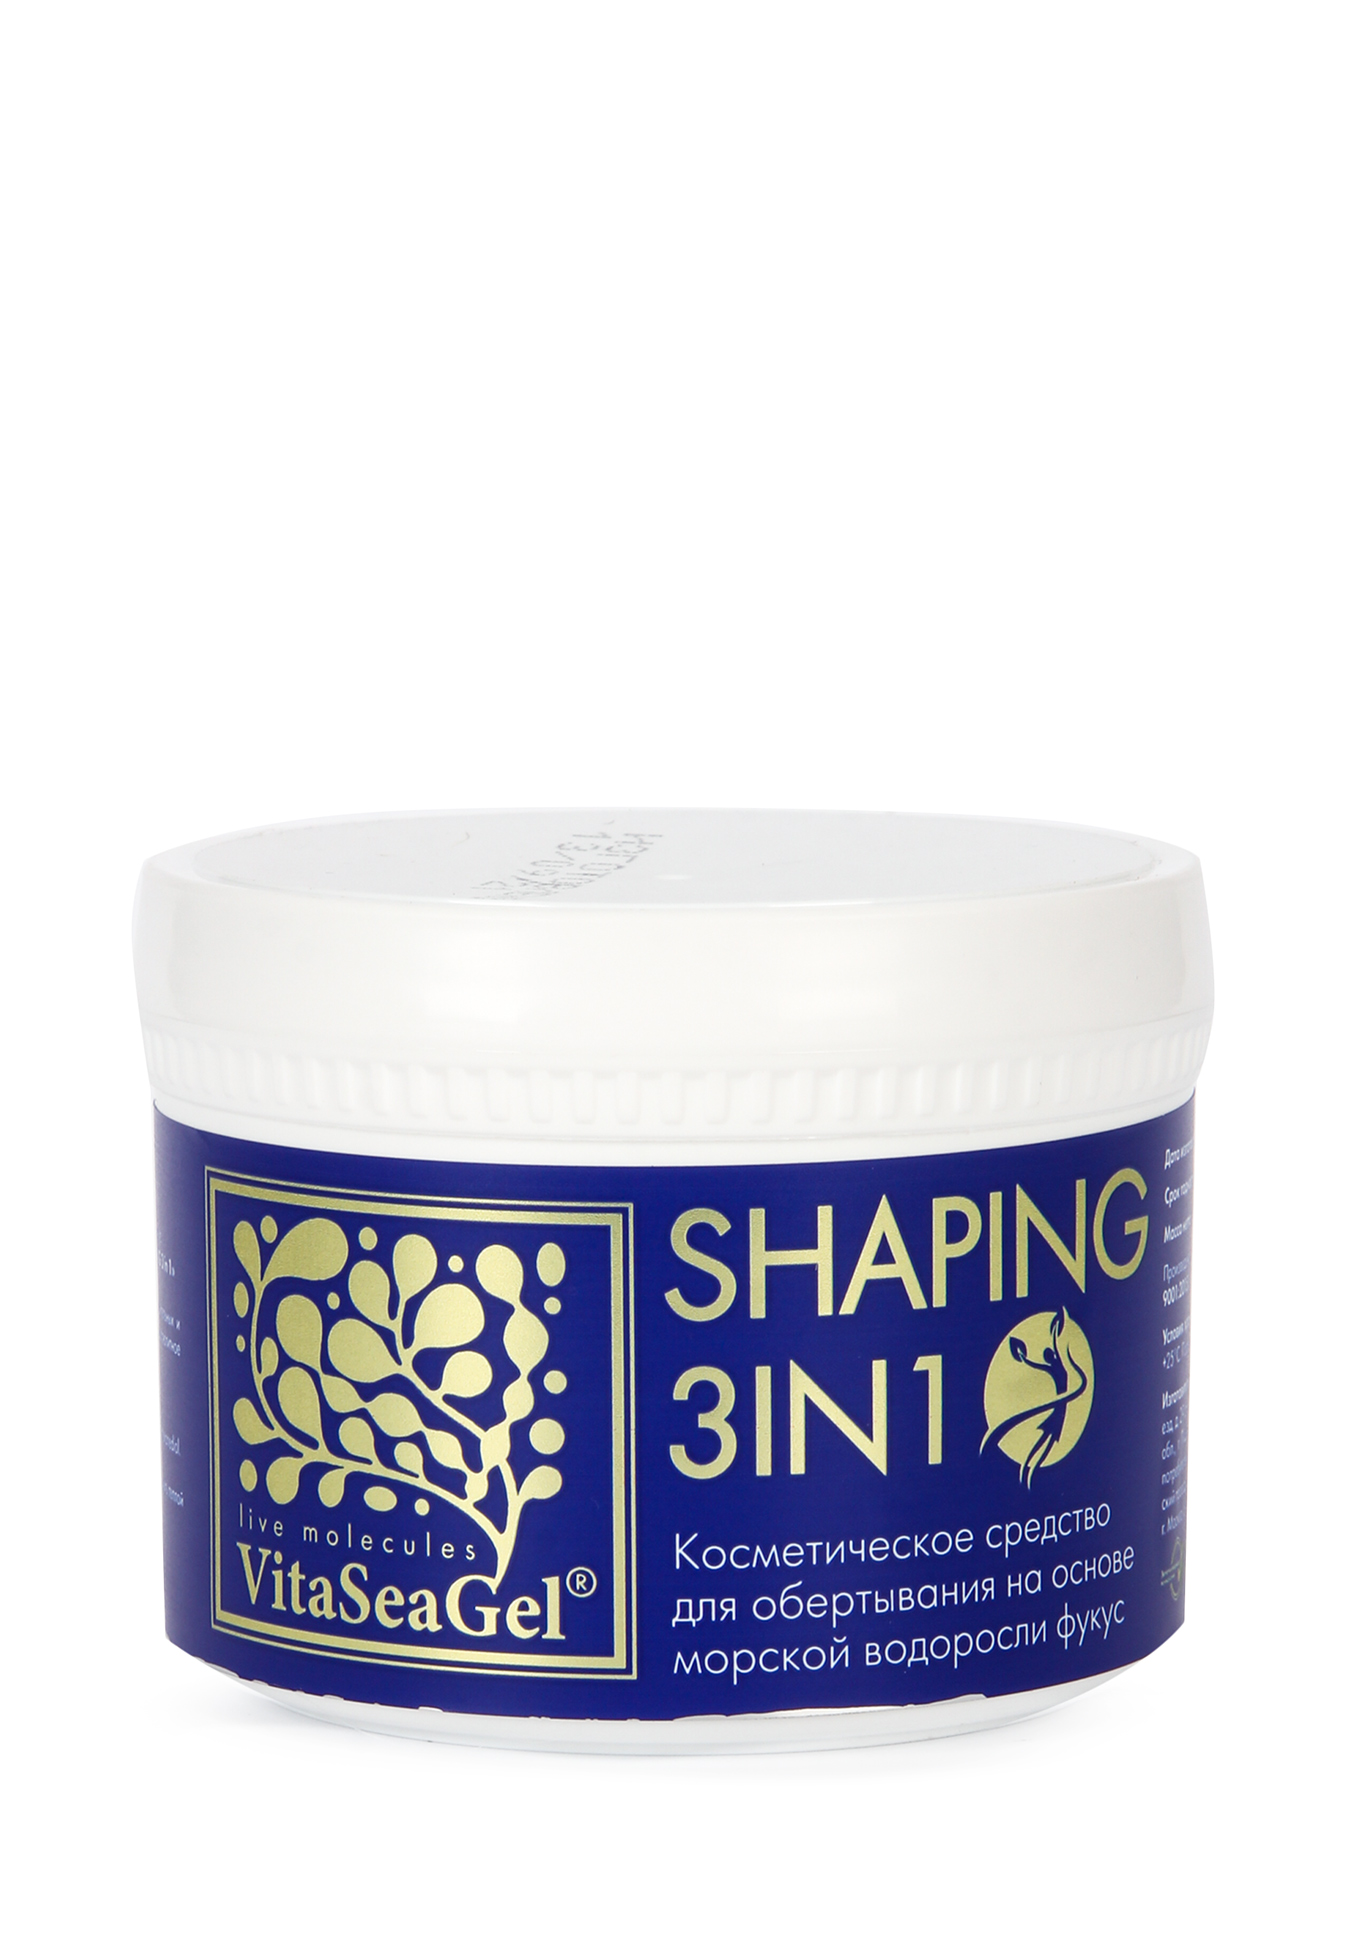 VITASEAGEL Shaping 3 в 1 гель для обертывания VitaSeaGel